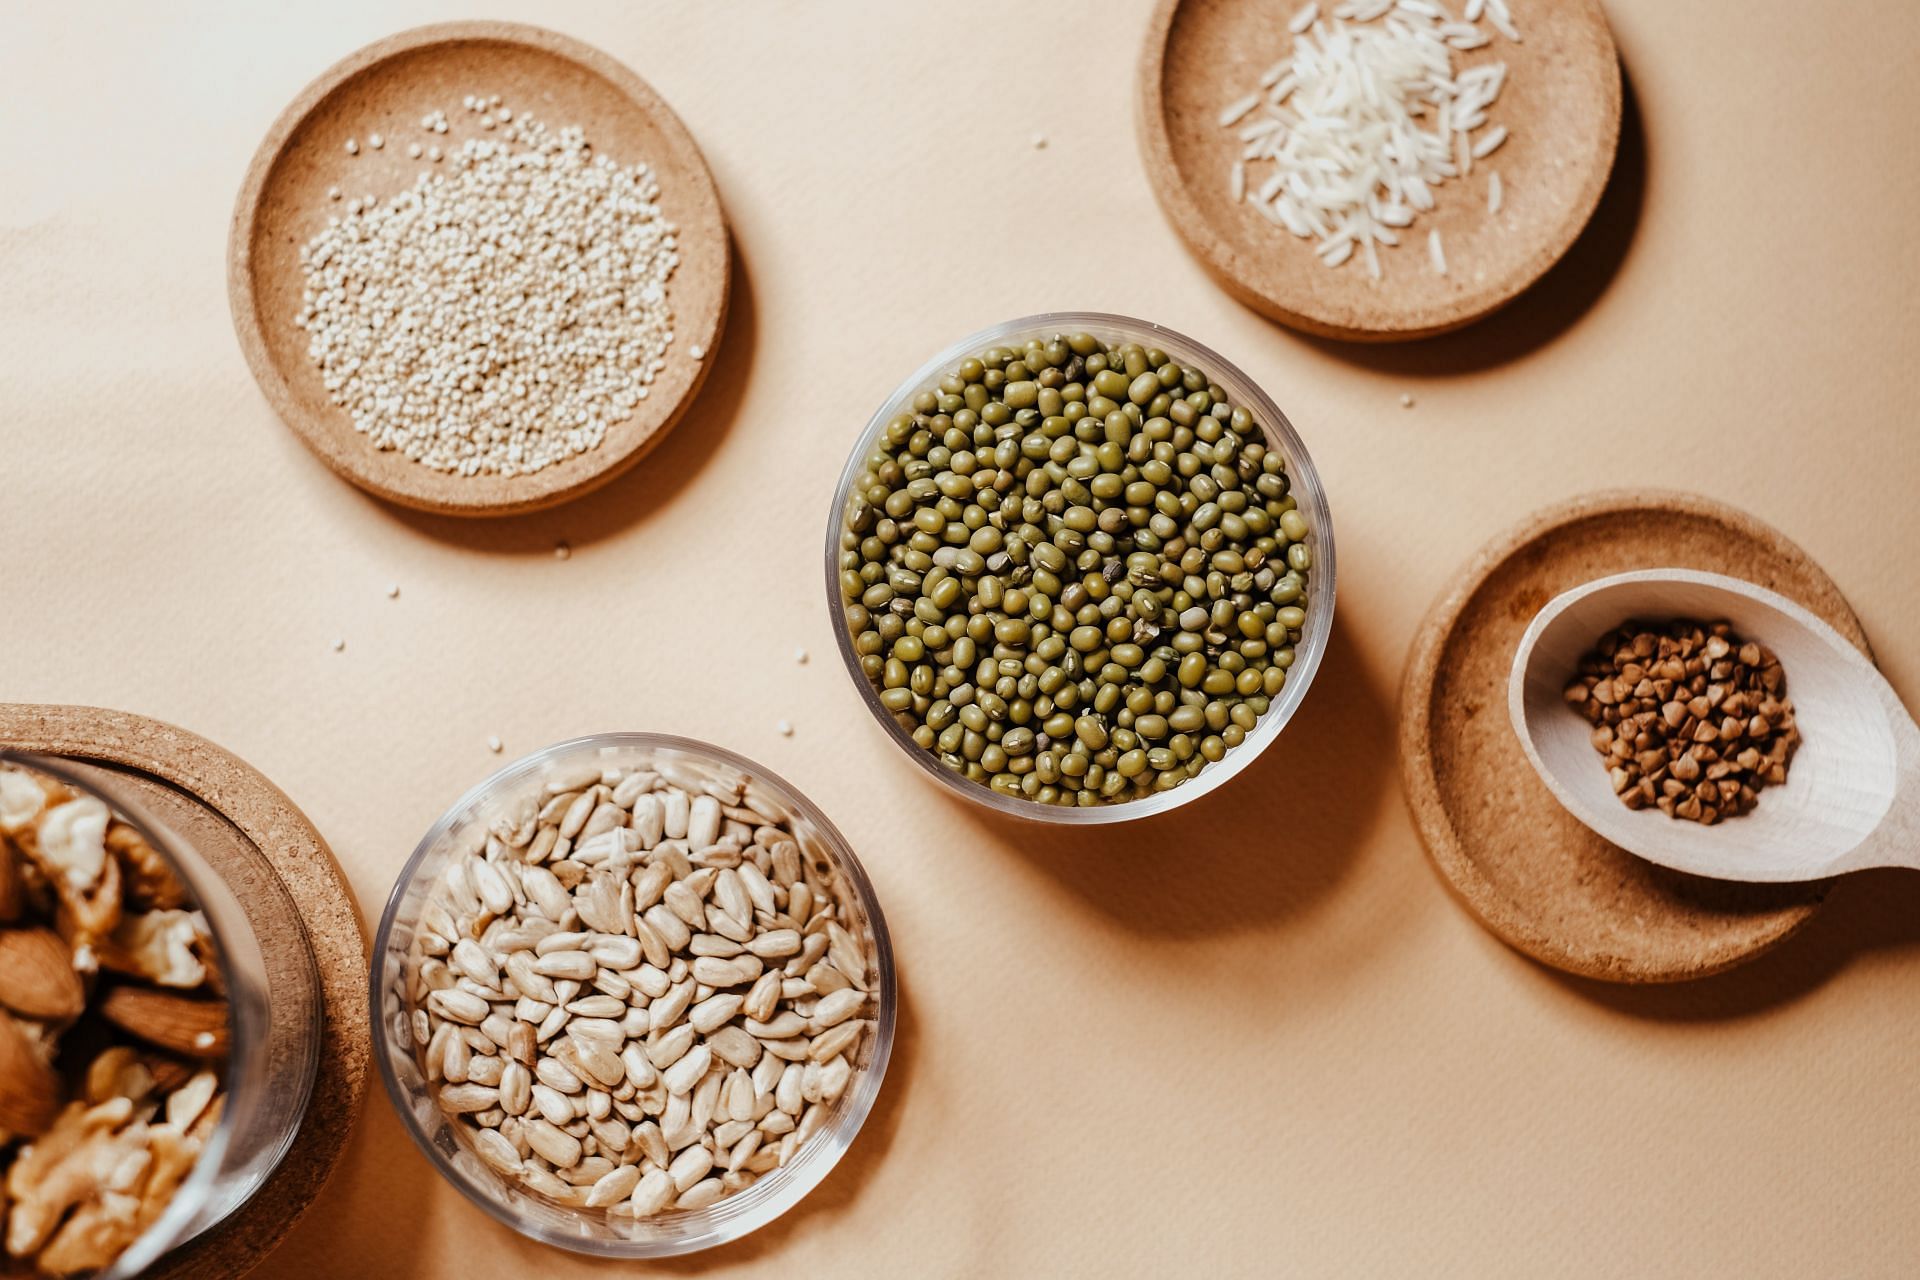 Quinoa as food to stimulate brain (Image sourced via Pexels / Photo by vie-studio)